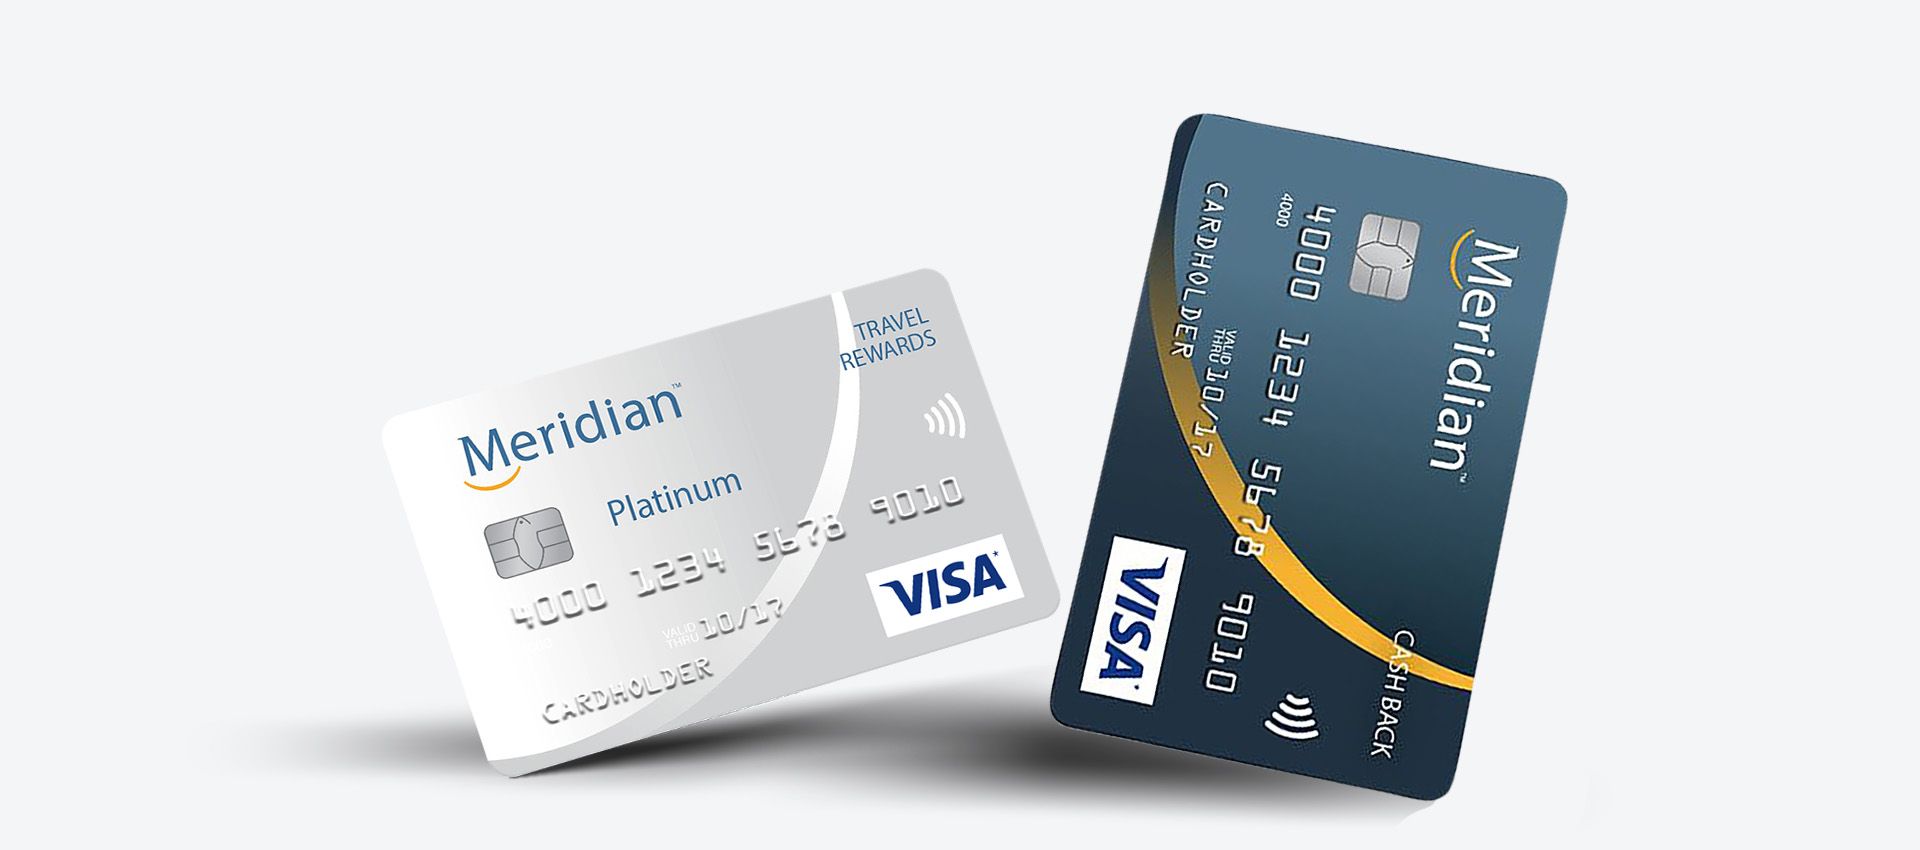 Meridian platinum travel rewards card and Meridian Cash back card